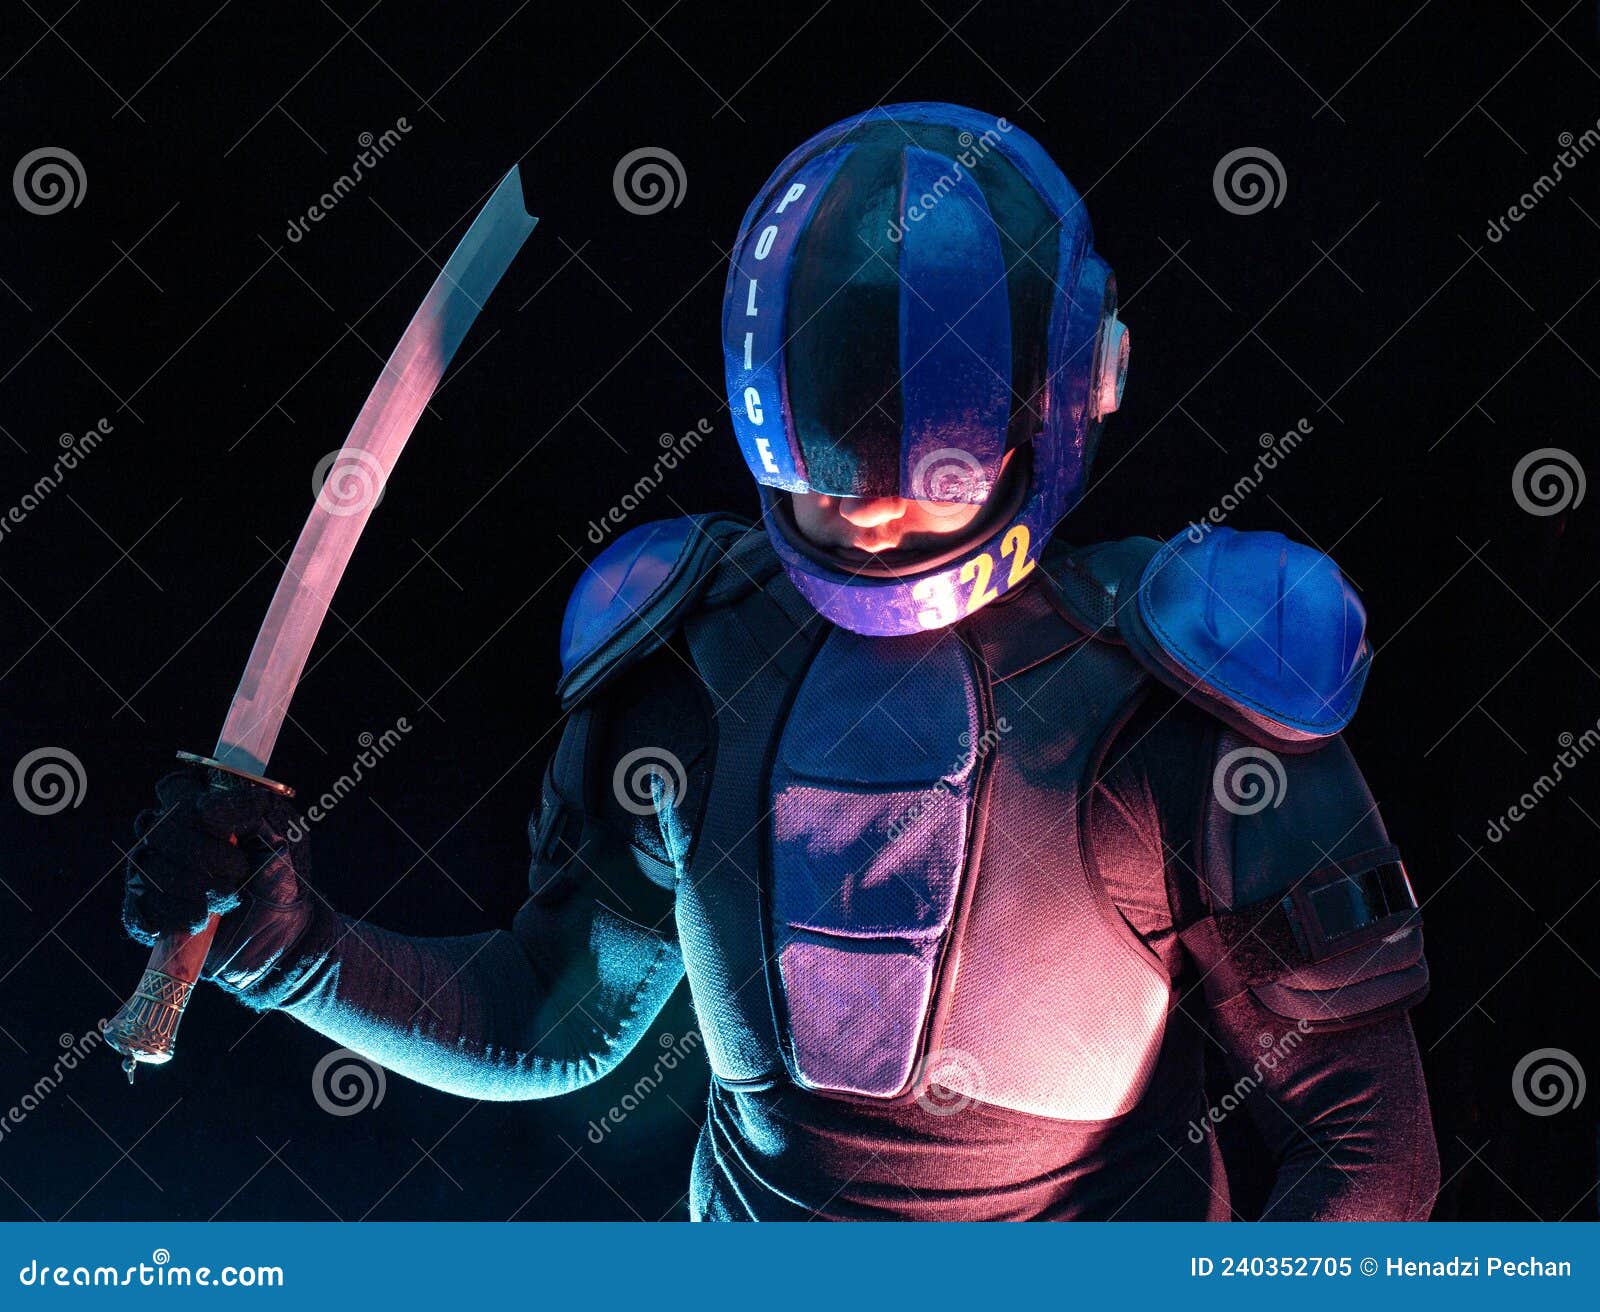 cyberpunk future concept. bionic cyborg police officer with short samurai sword stands in dark. halfman robot looks at camera.